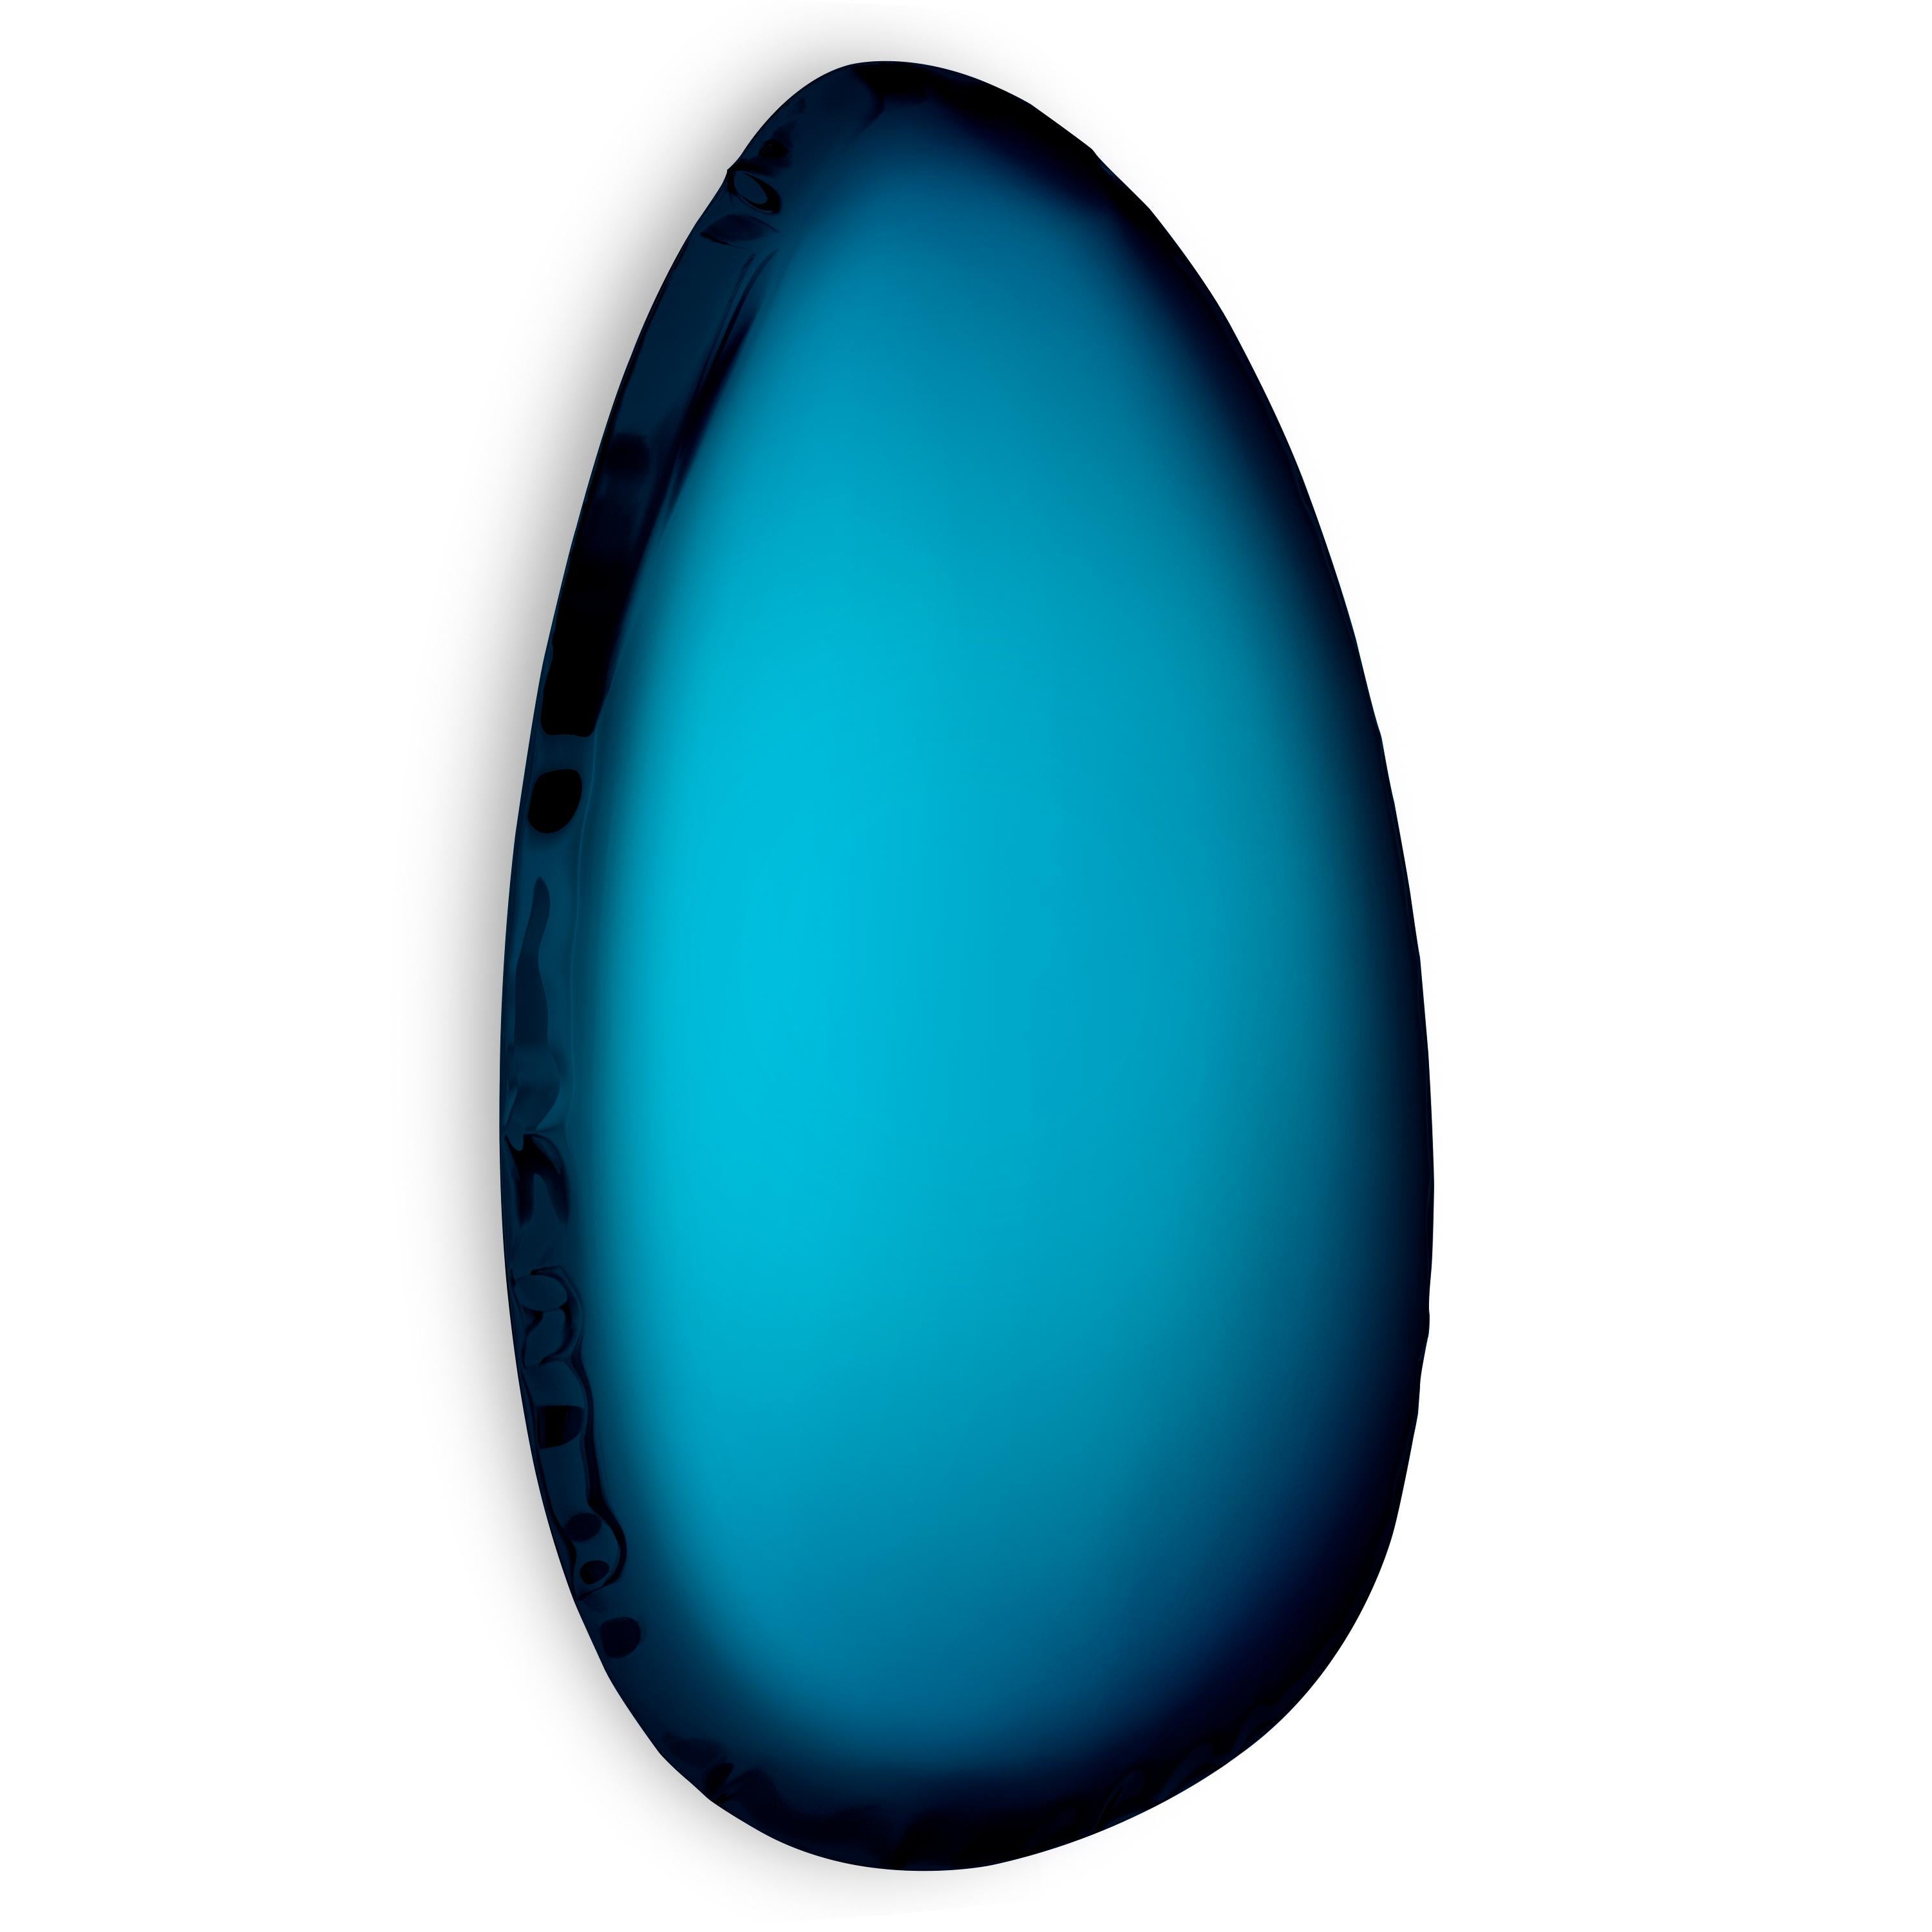 Miroir mural Tafla O4.5 bleu profond par Zieta
Dimensions : D 6 x L 57 x H 86 cm 
Matériau : Acier inoxydable.
Finition : Bleu espace profond. 
Finitions disponibles : Acier inoxydable, blanc mat, saphir/émeraude, saphir, émeraude, bleu espace